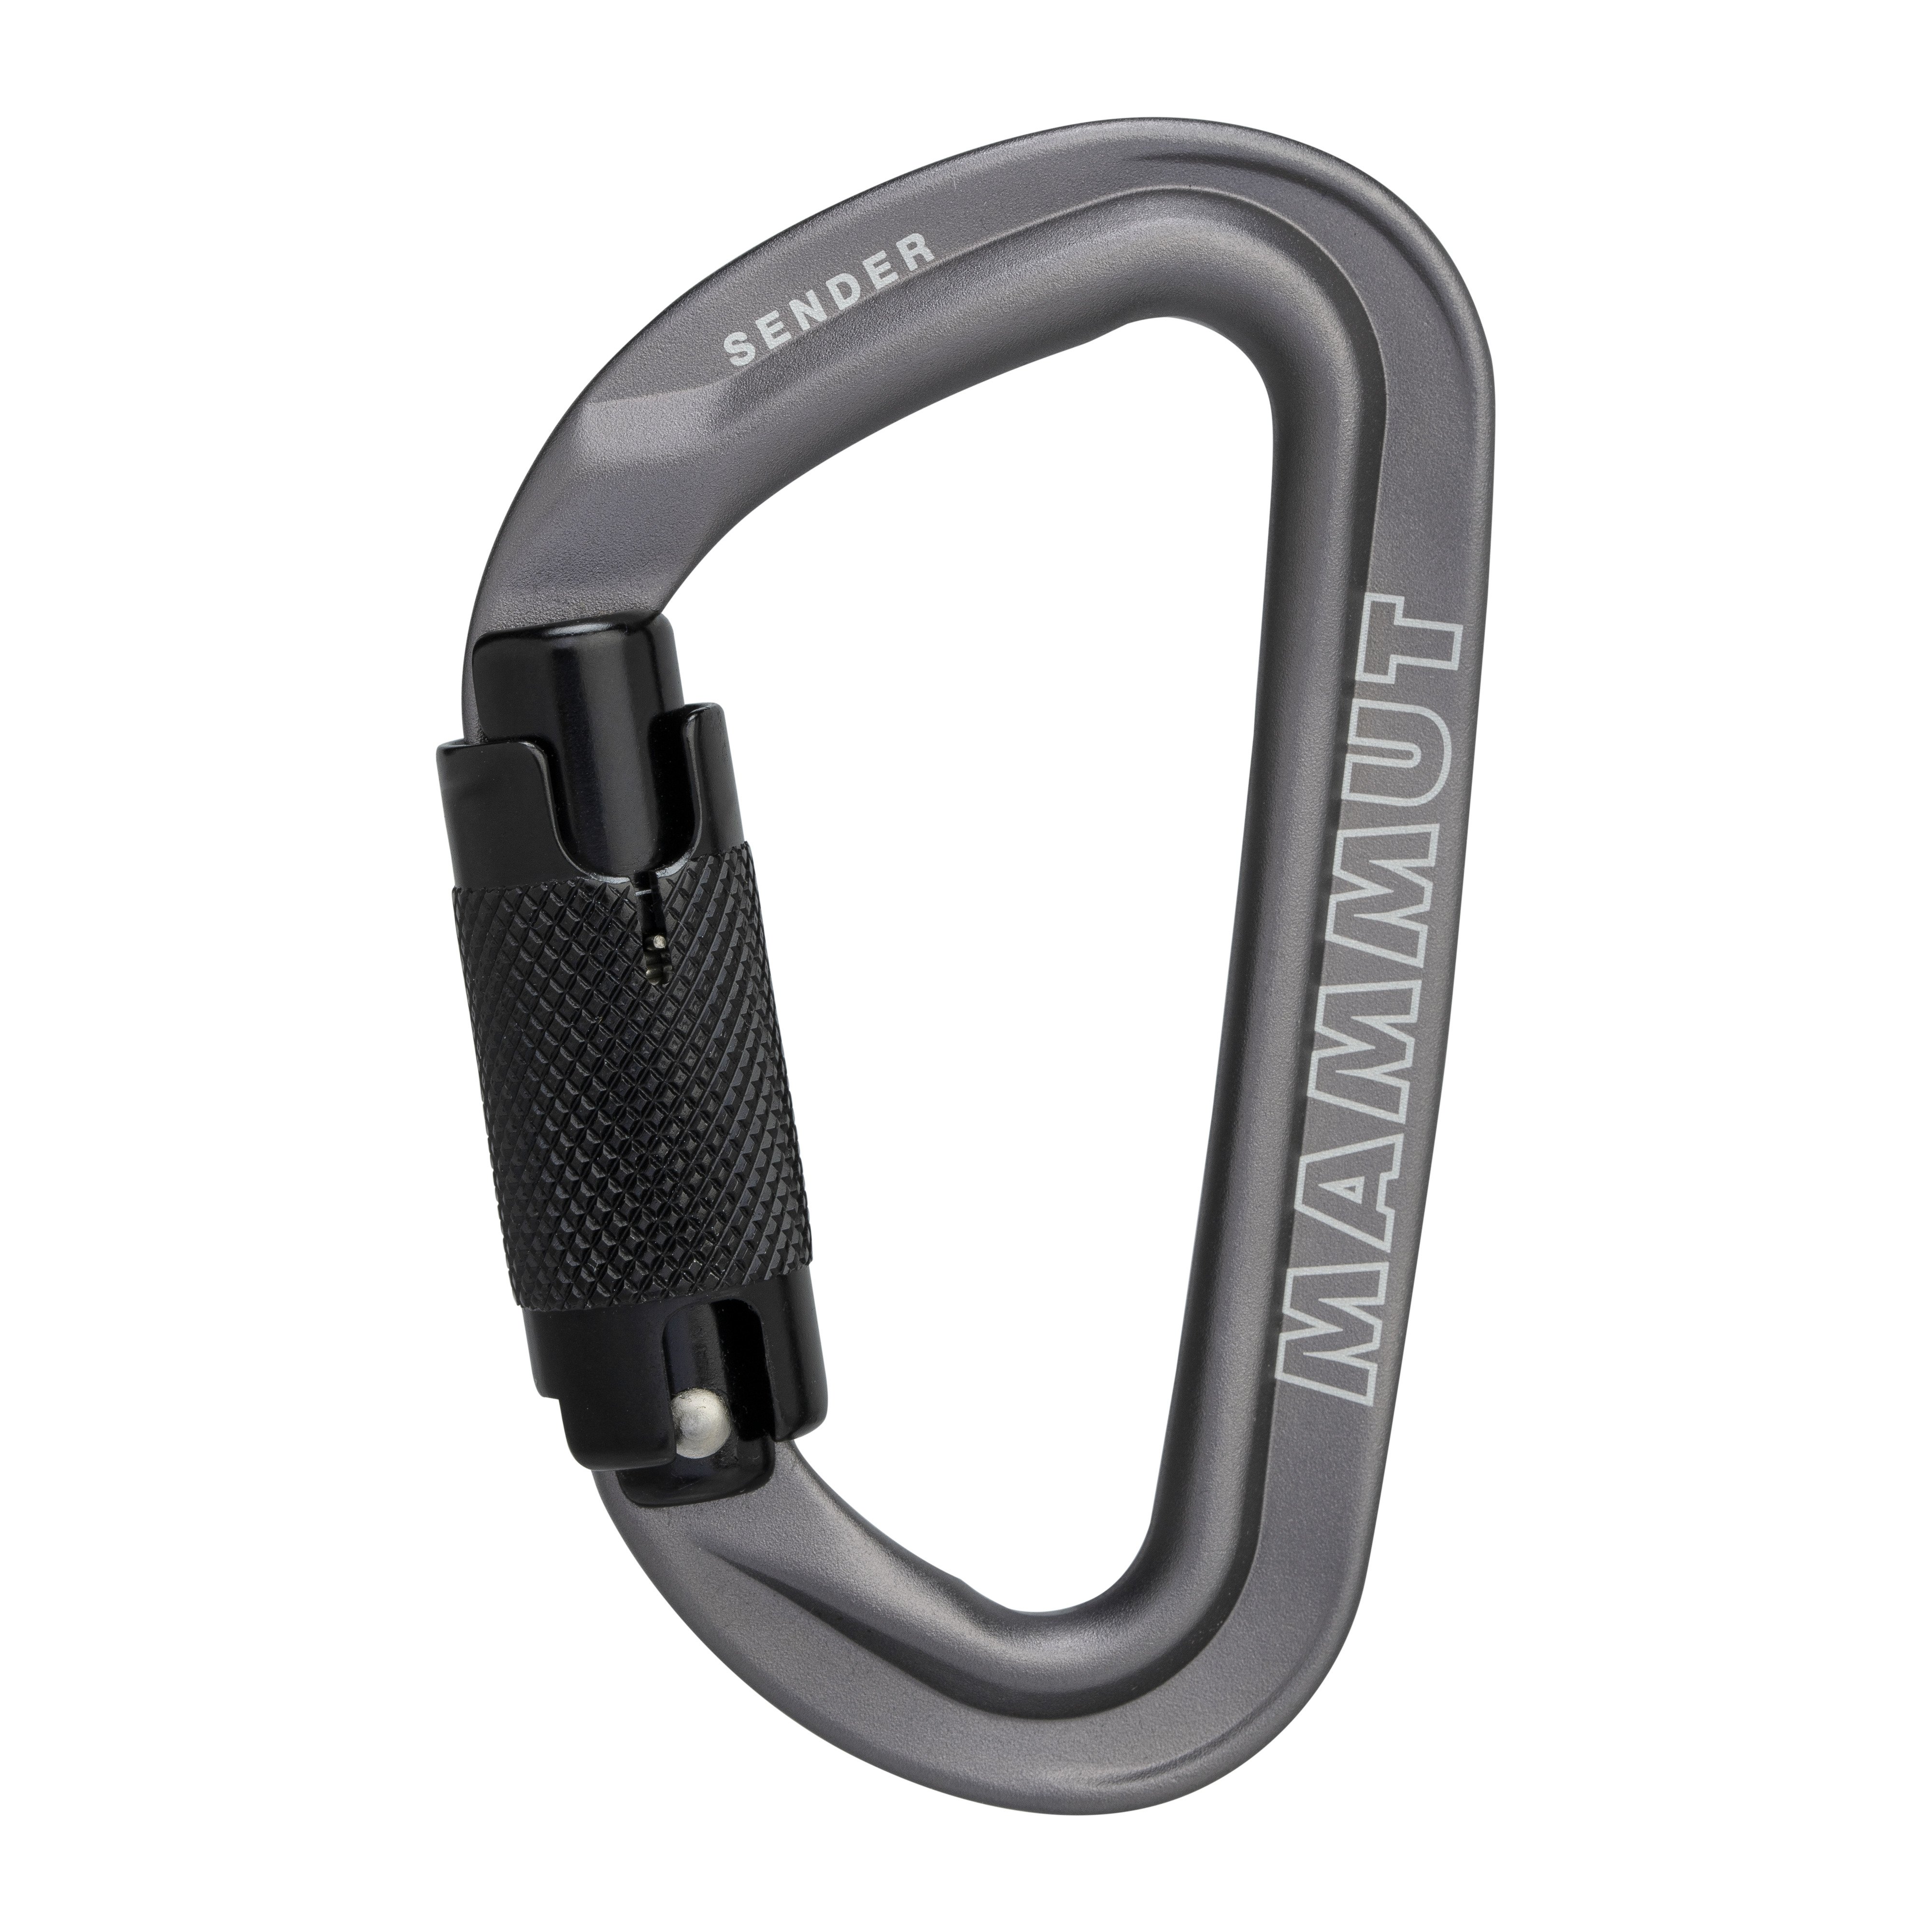 Sender Twistlock Carabiner - one size product image